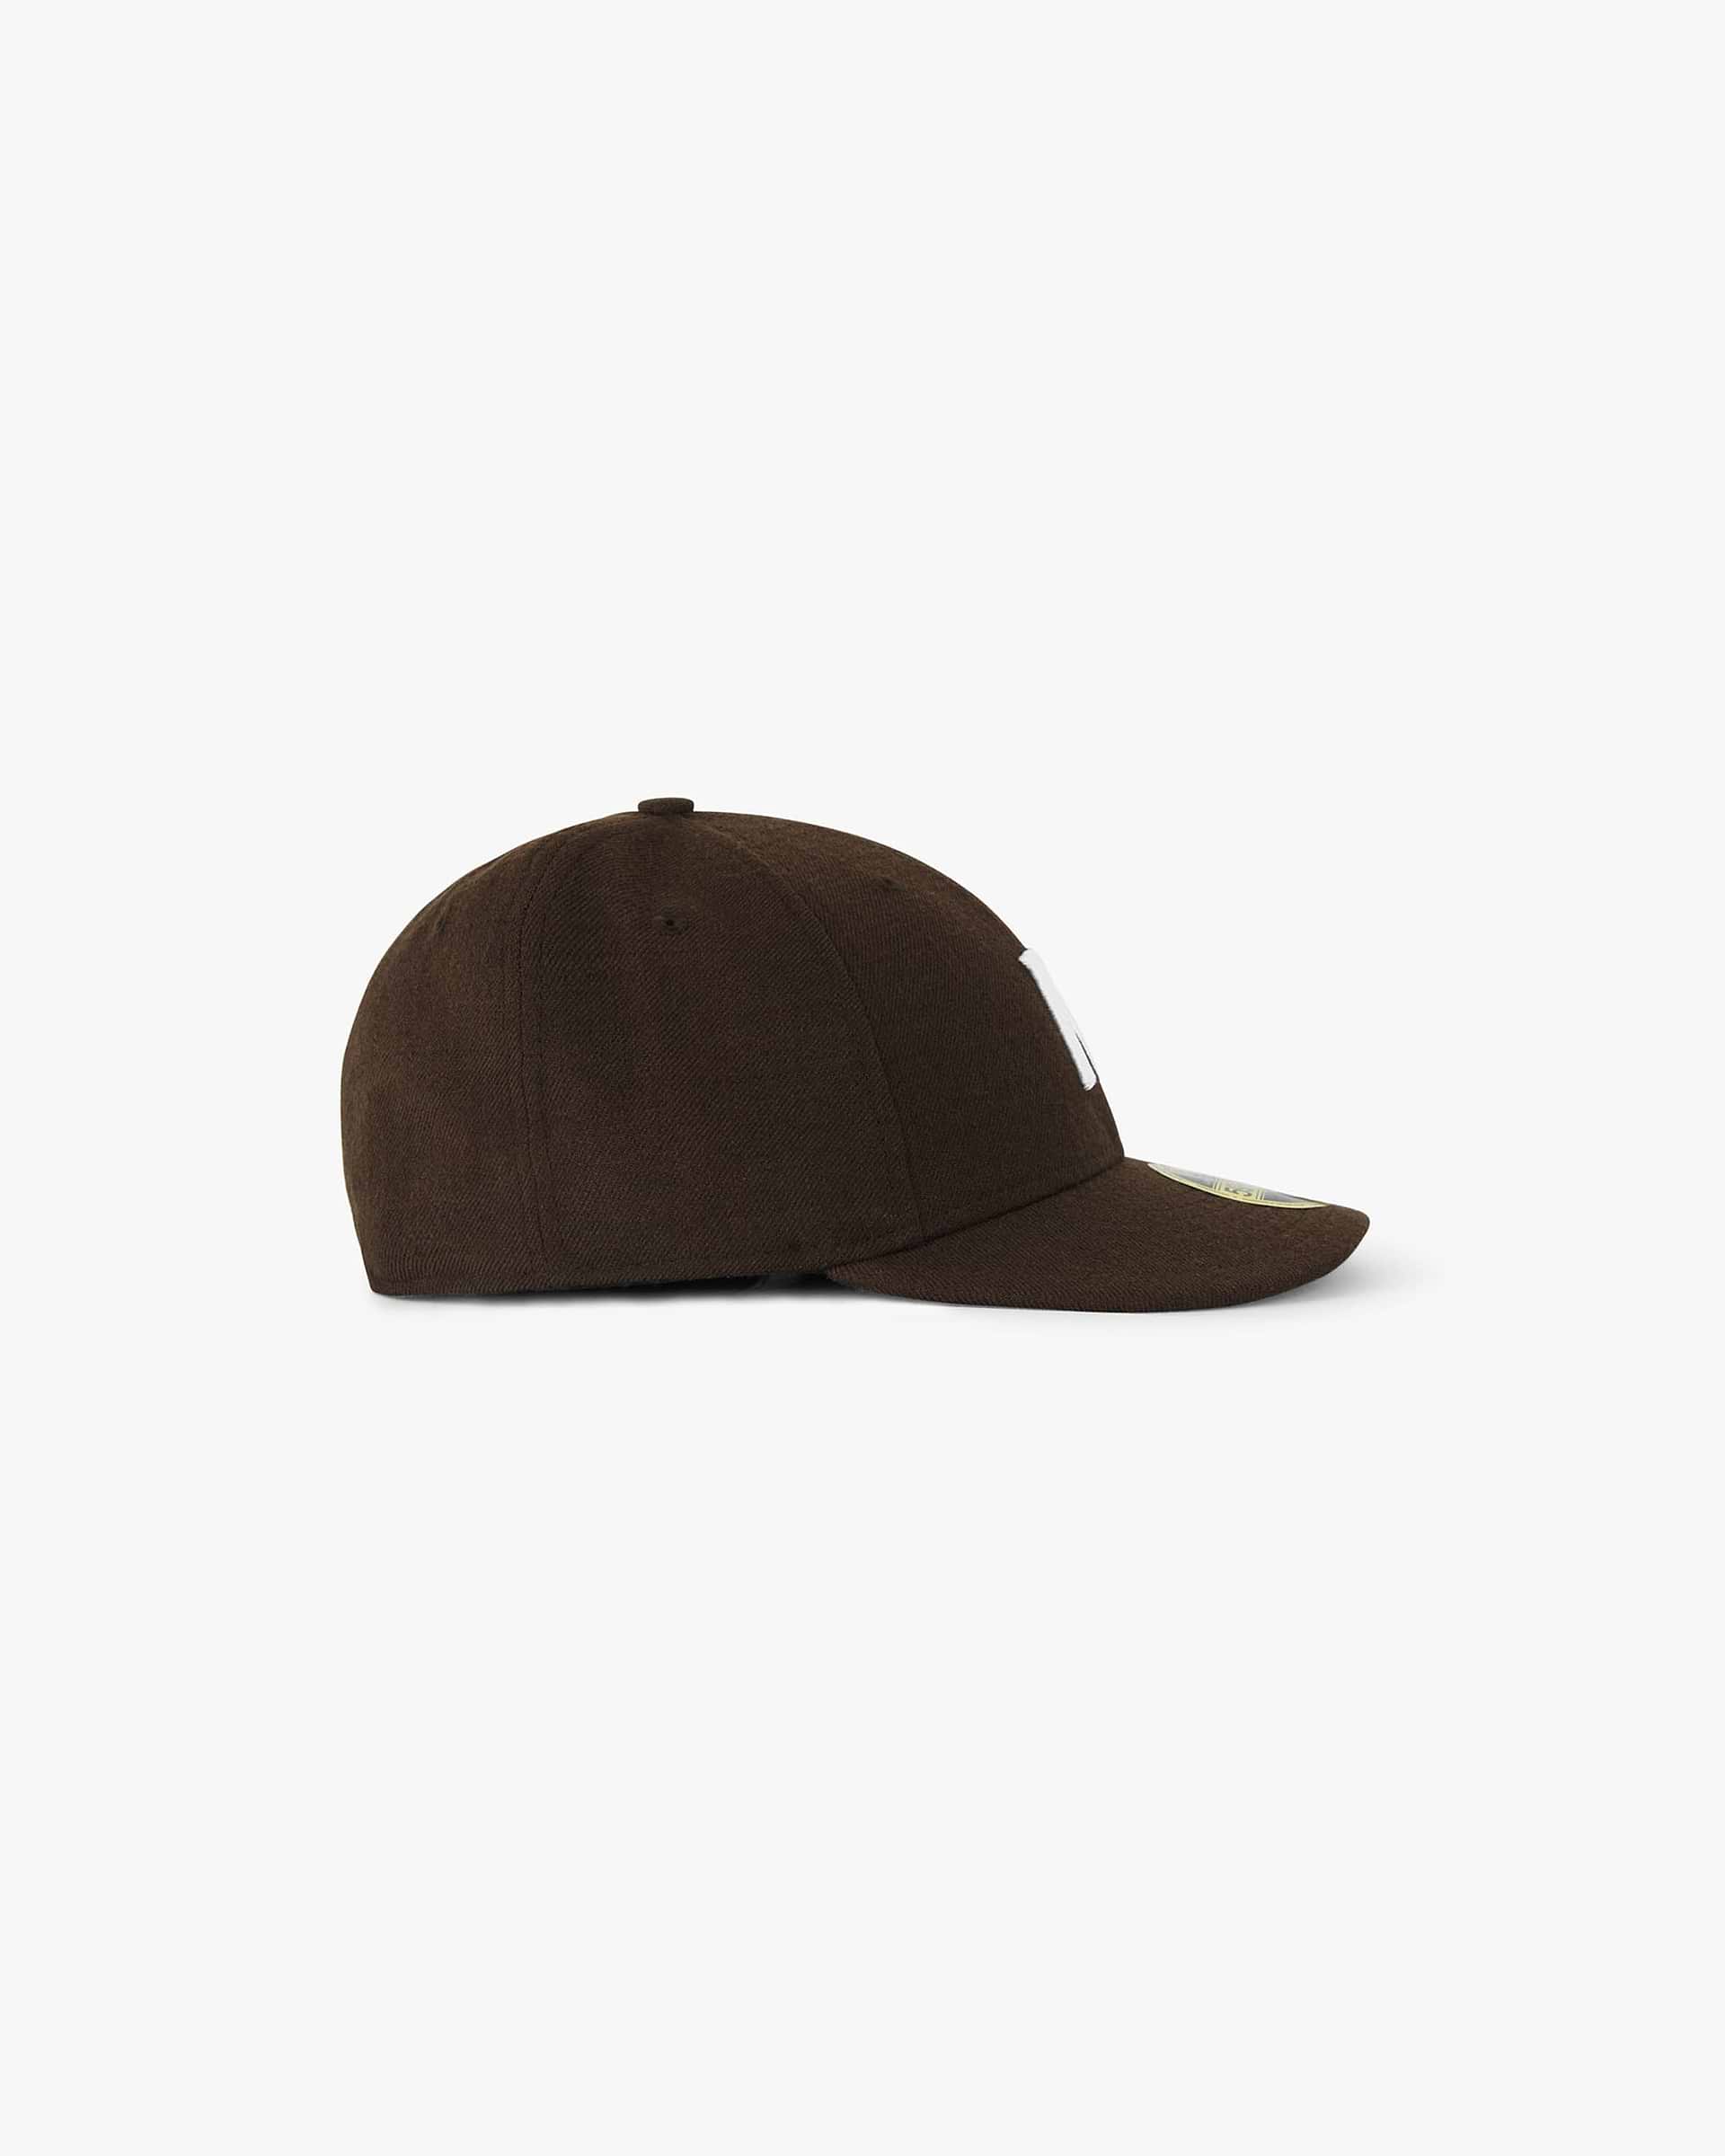 Initial New Era 59Fifty Cap | Vintage Brown Accessories FW22 | Represent Clo